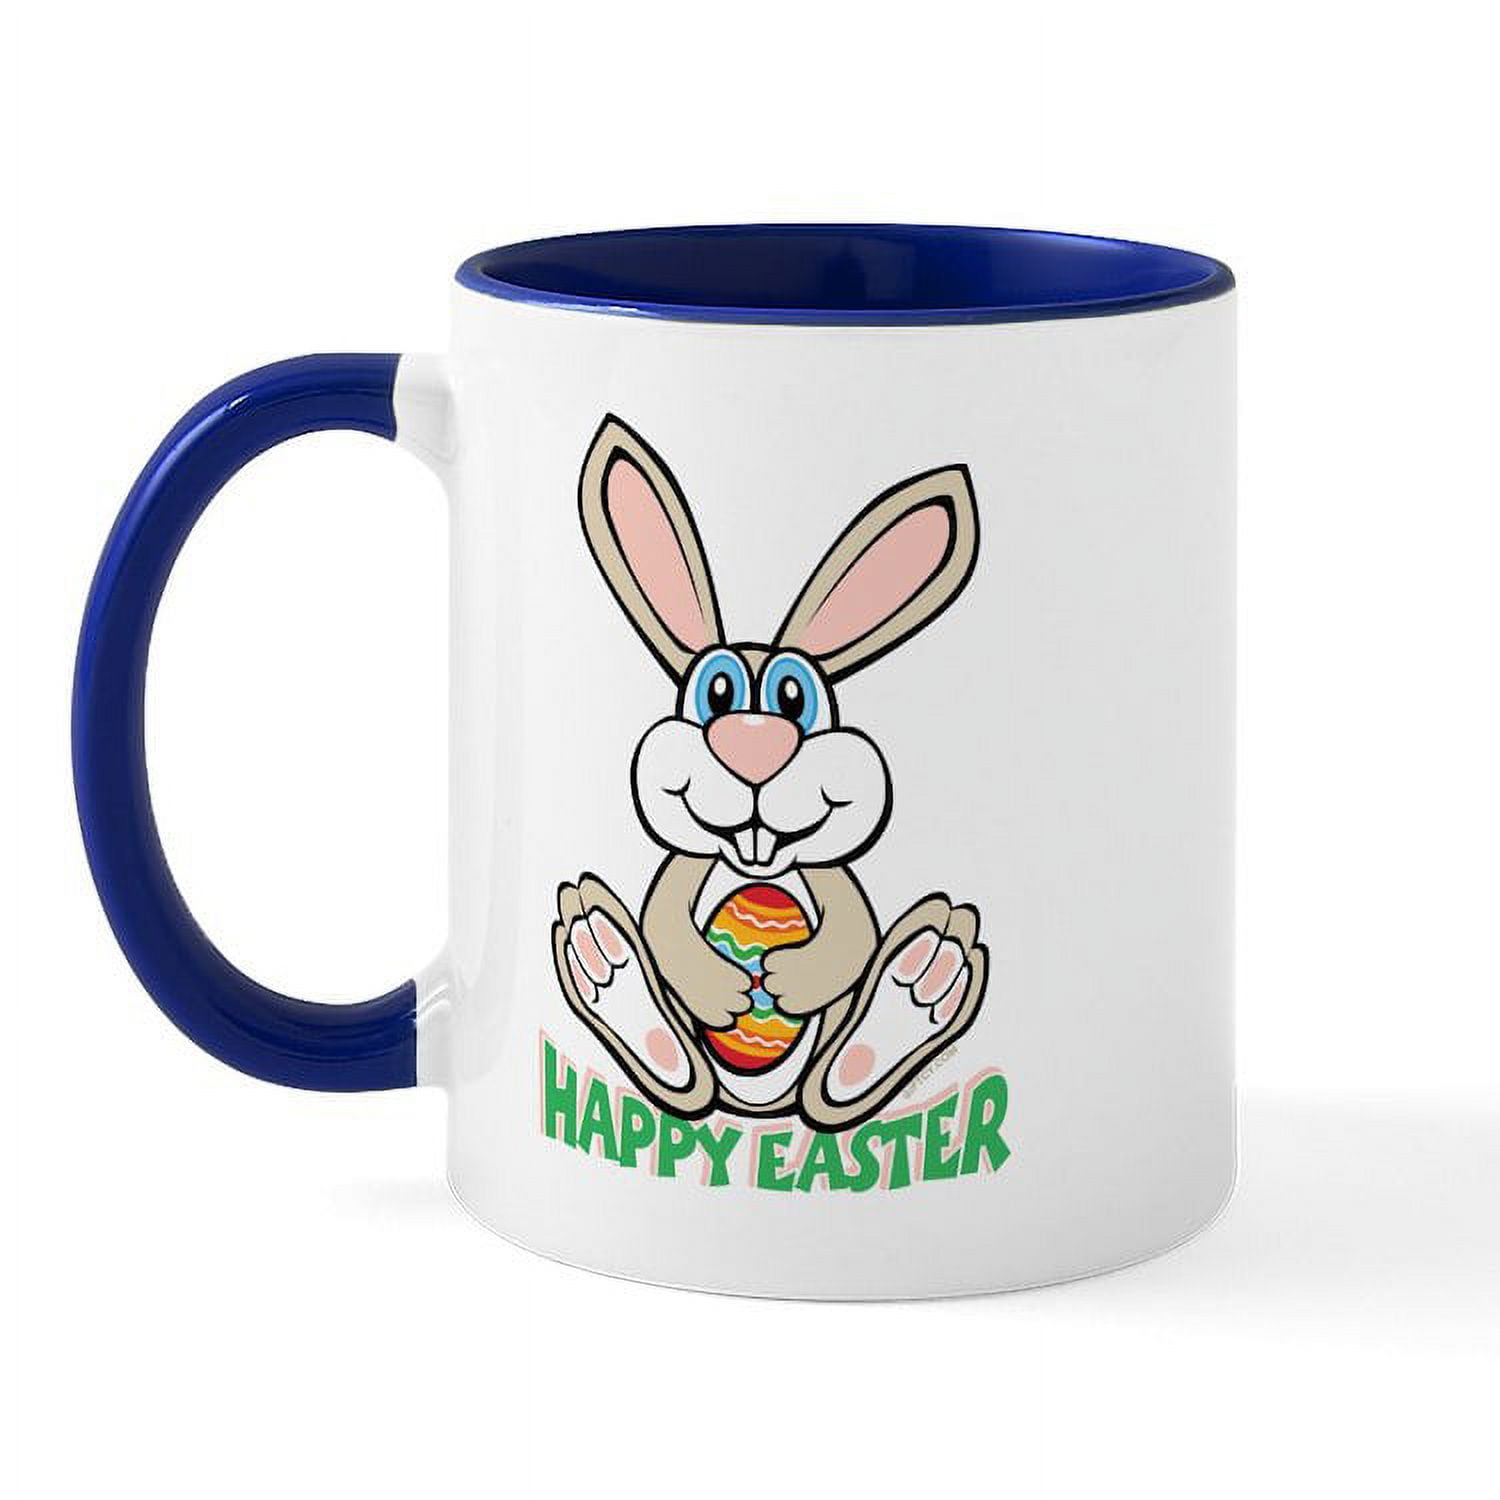 CafePress - Happy Easter Mug - 11 oz Ceramic Mug - Novelty Coffee Tea ...